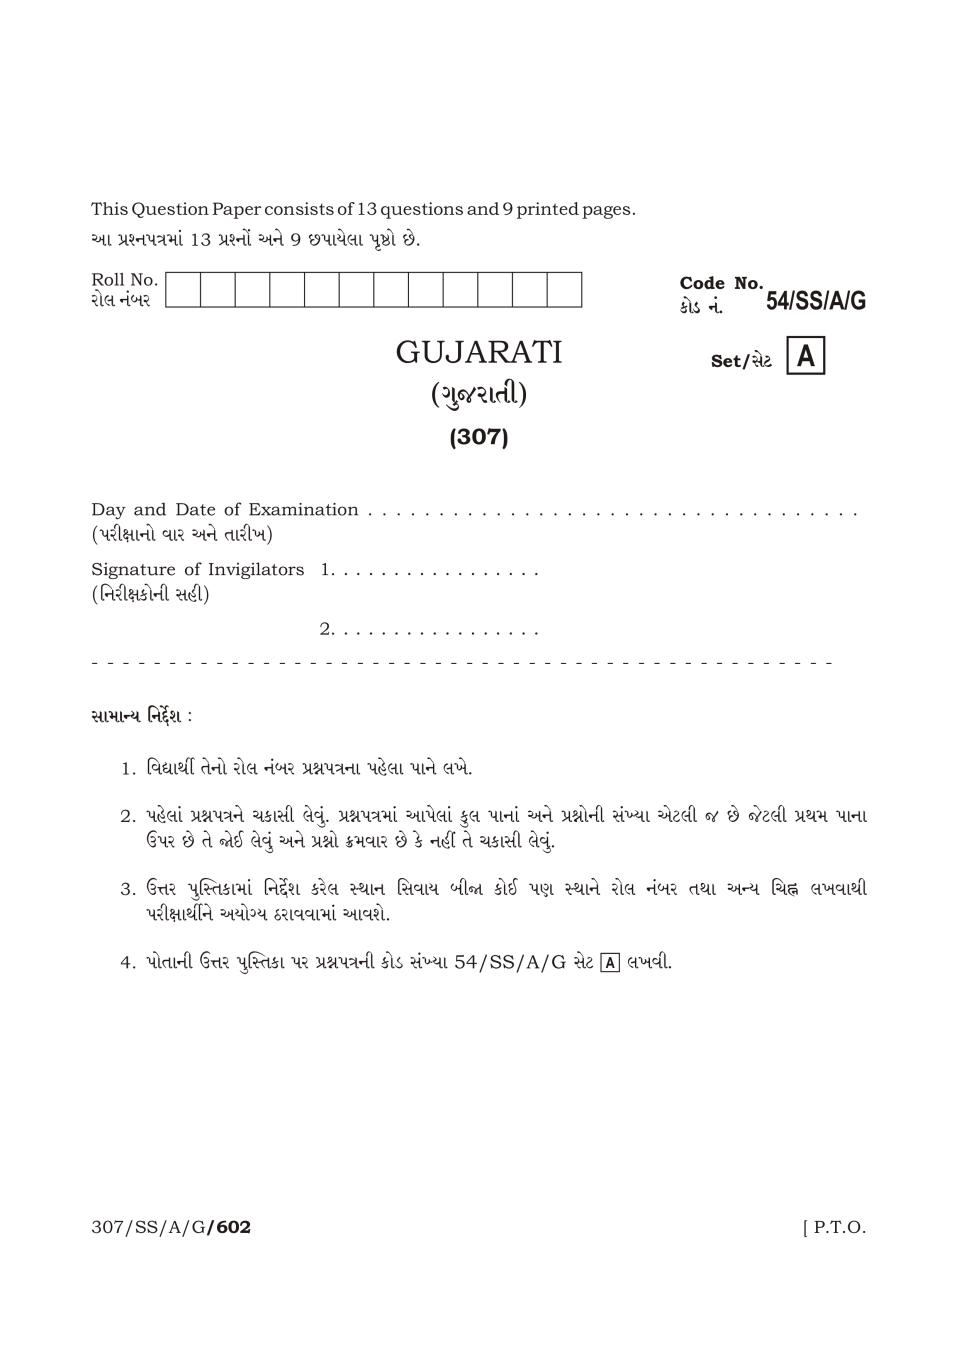 NIOS Class 12 Question Paper Apr 2017 - Gujarati - Page 1